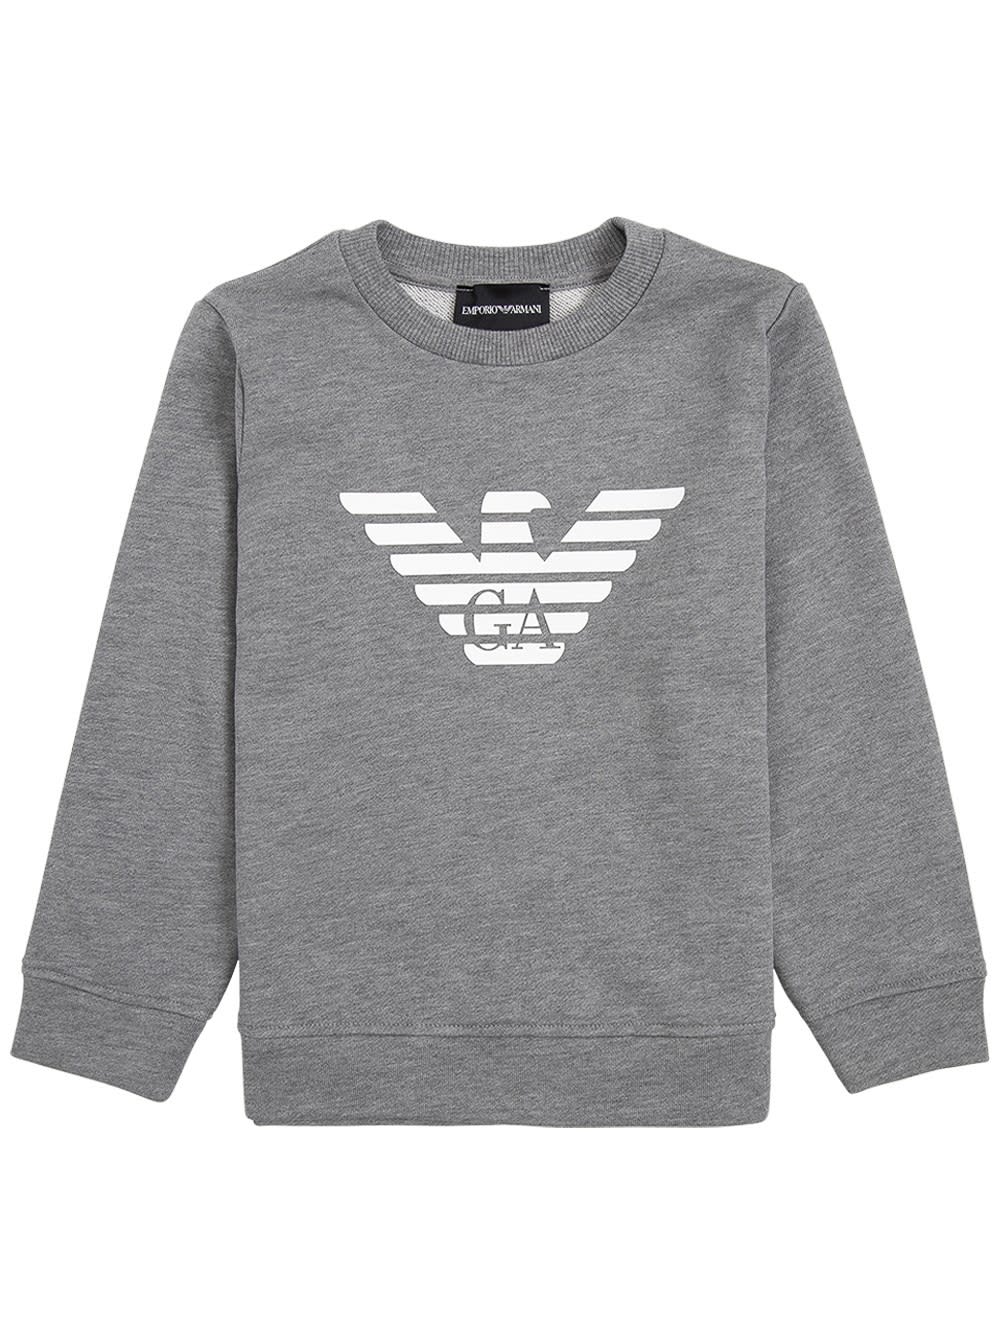 Emporio Armani Grey Modal Blend Sweatshirt With Logo